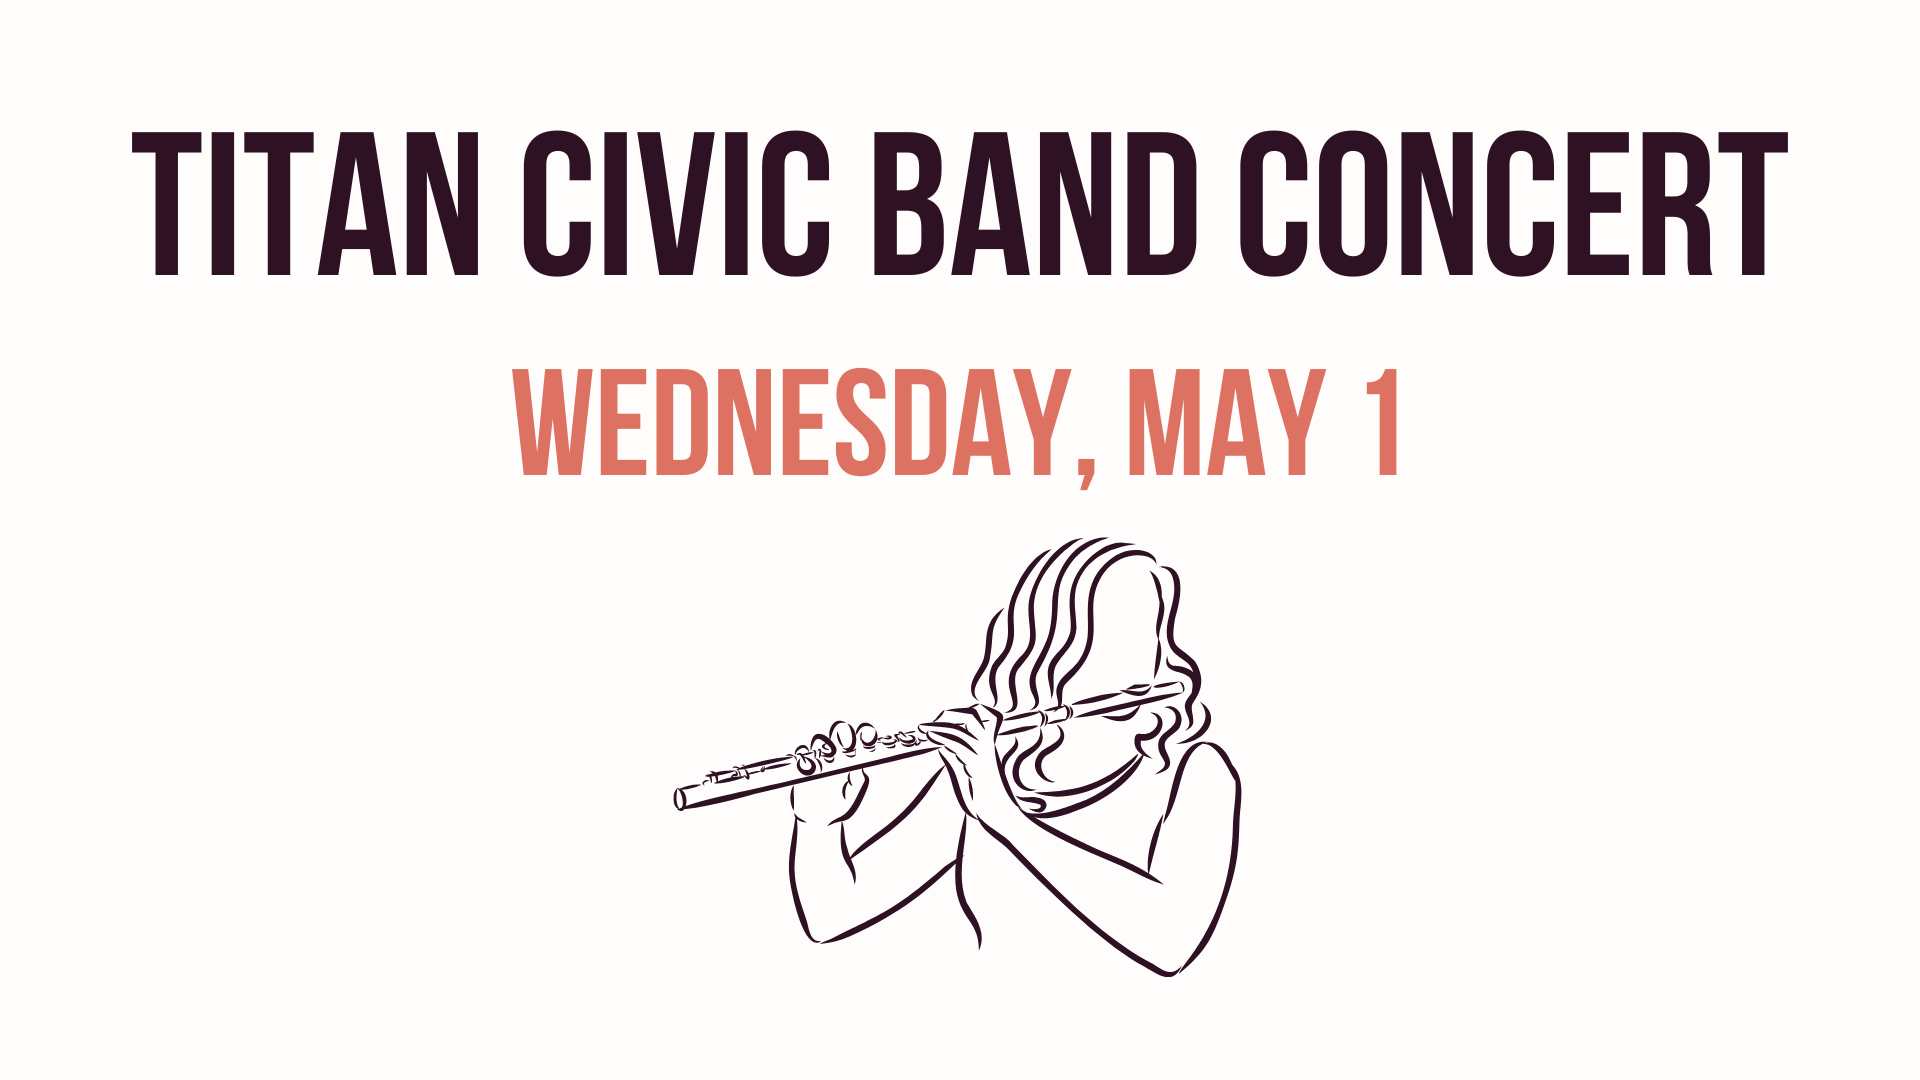 Titan Civic Band Concert graphic